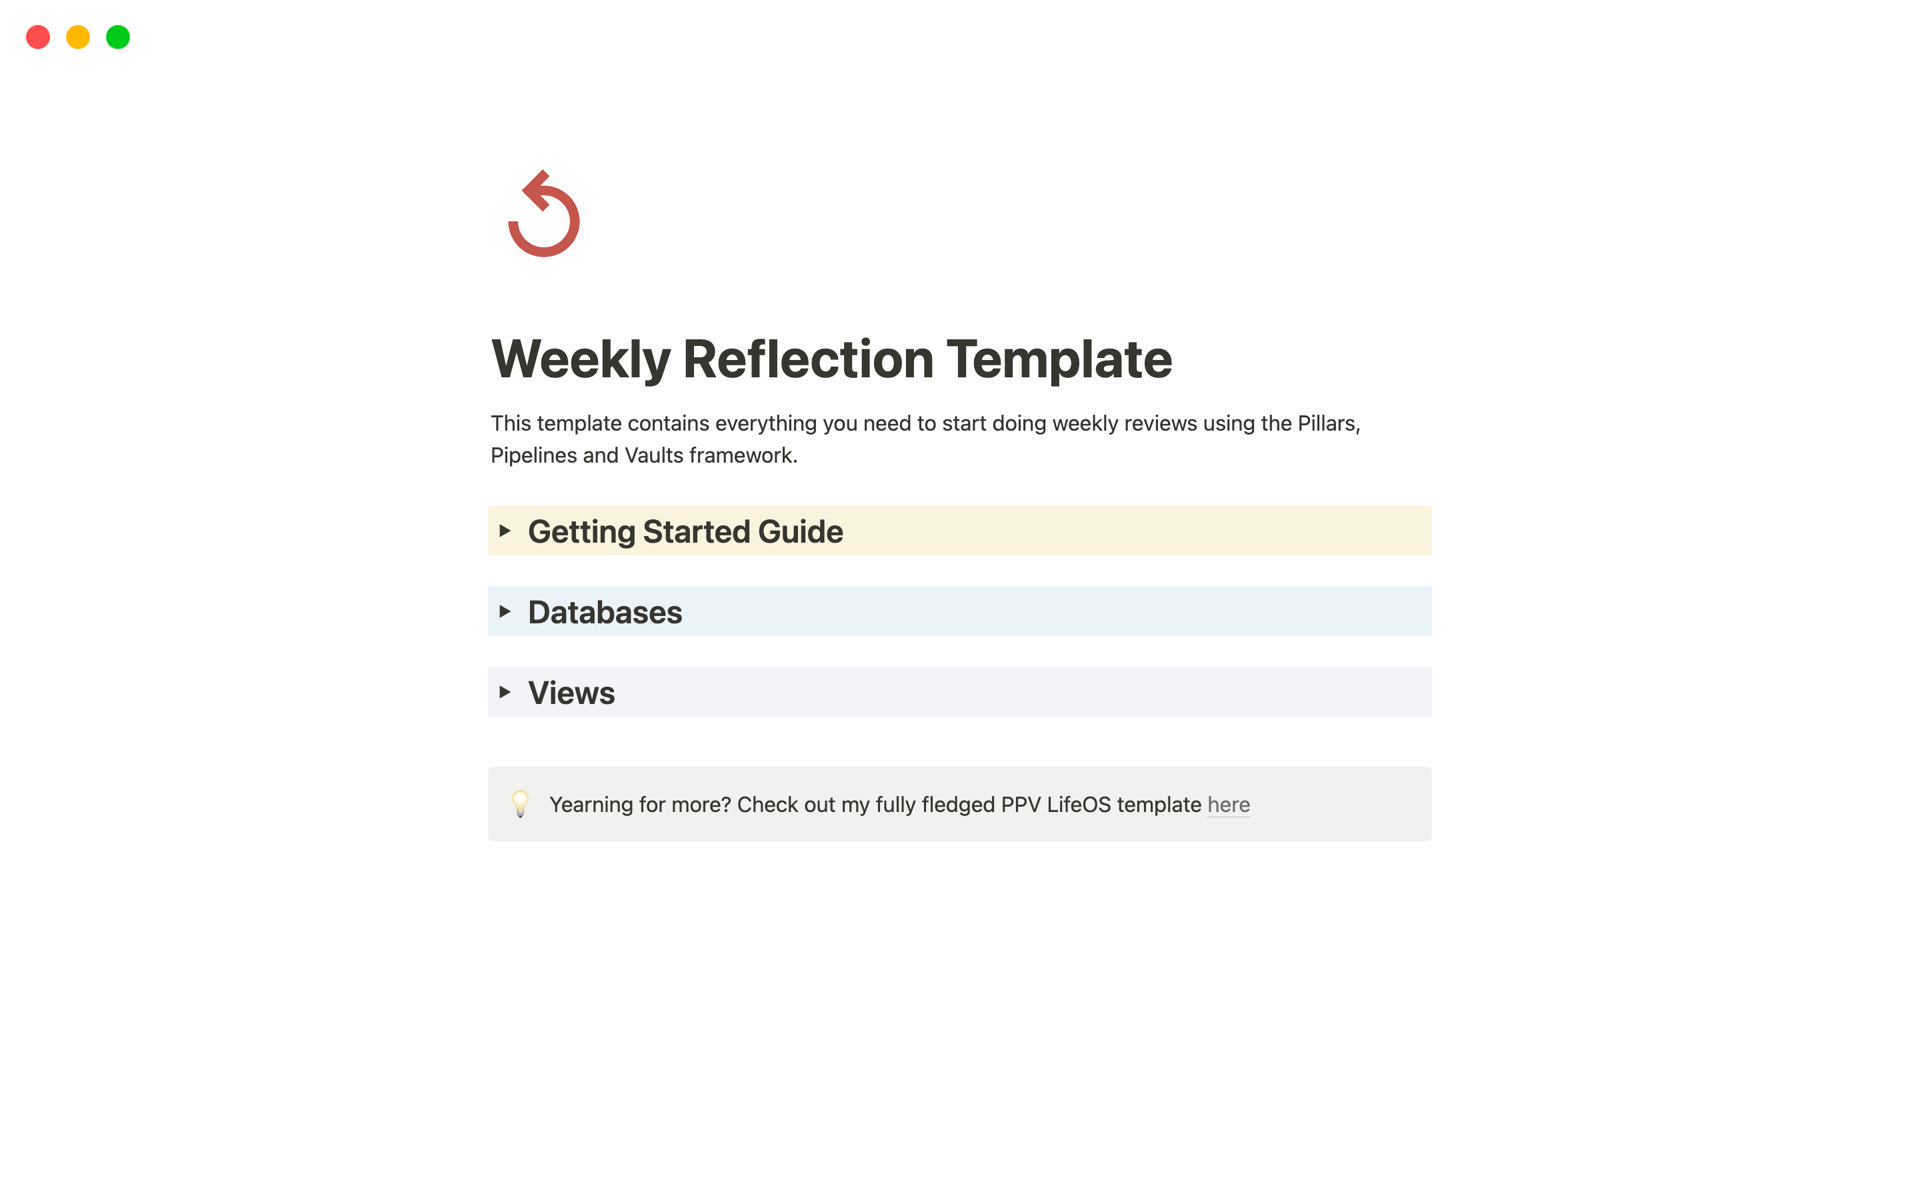 Aperçu du modèle de Weekly Reflection Template